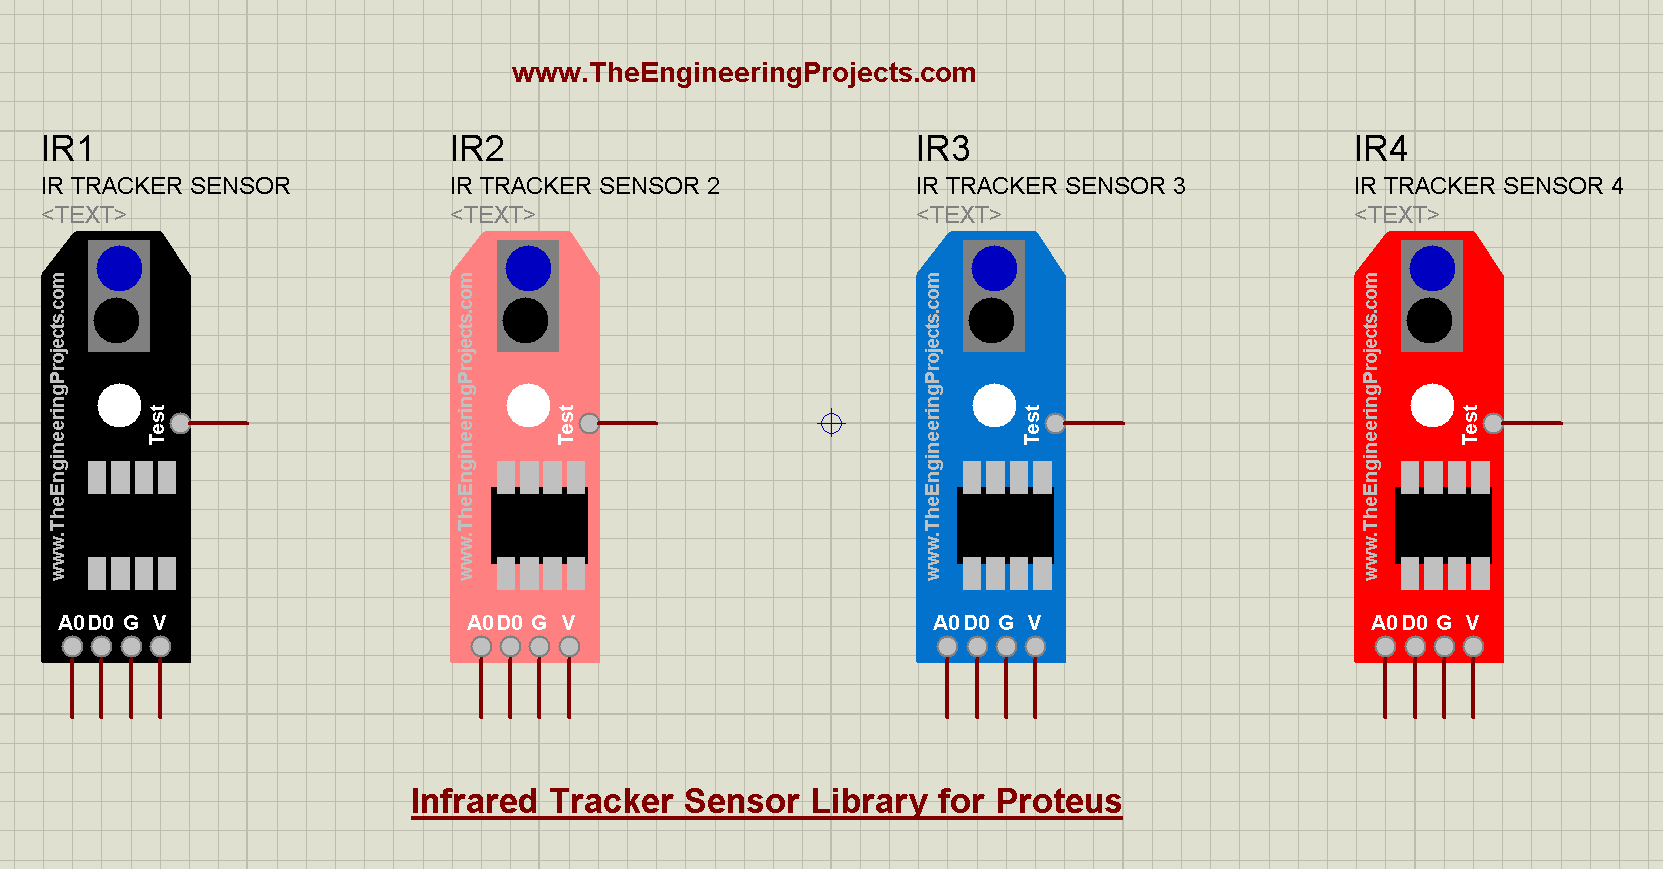 Infrared Tracker Sensor Library for Proteus, Infrared Tracker Sensor in Proteus, Infrared Tracker Sensor Proteus, ir in proteus, infrared proteus, infrared in proteus, ir proteus simulation, infrared sensor in proteus